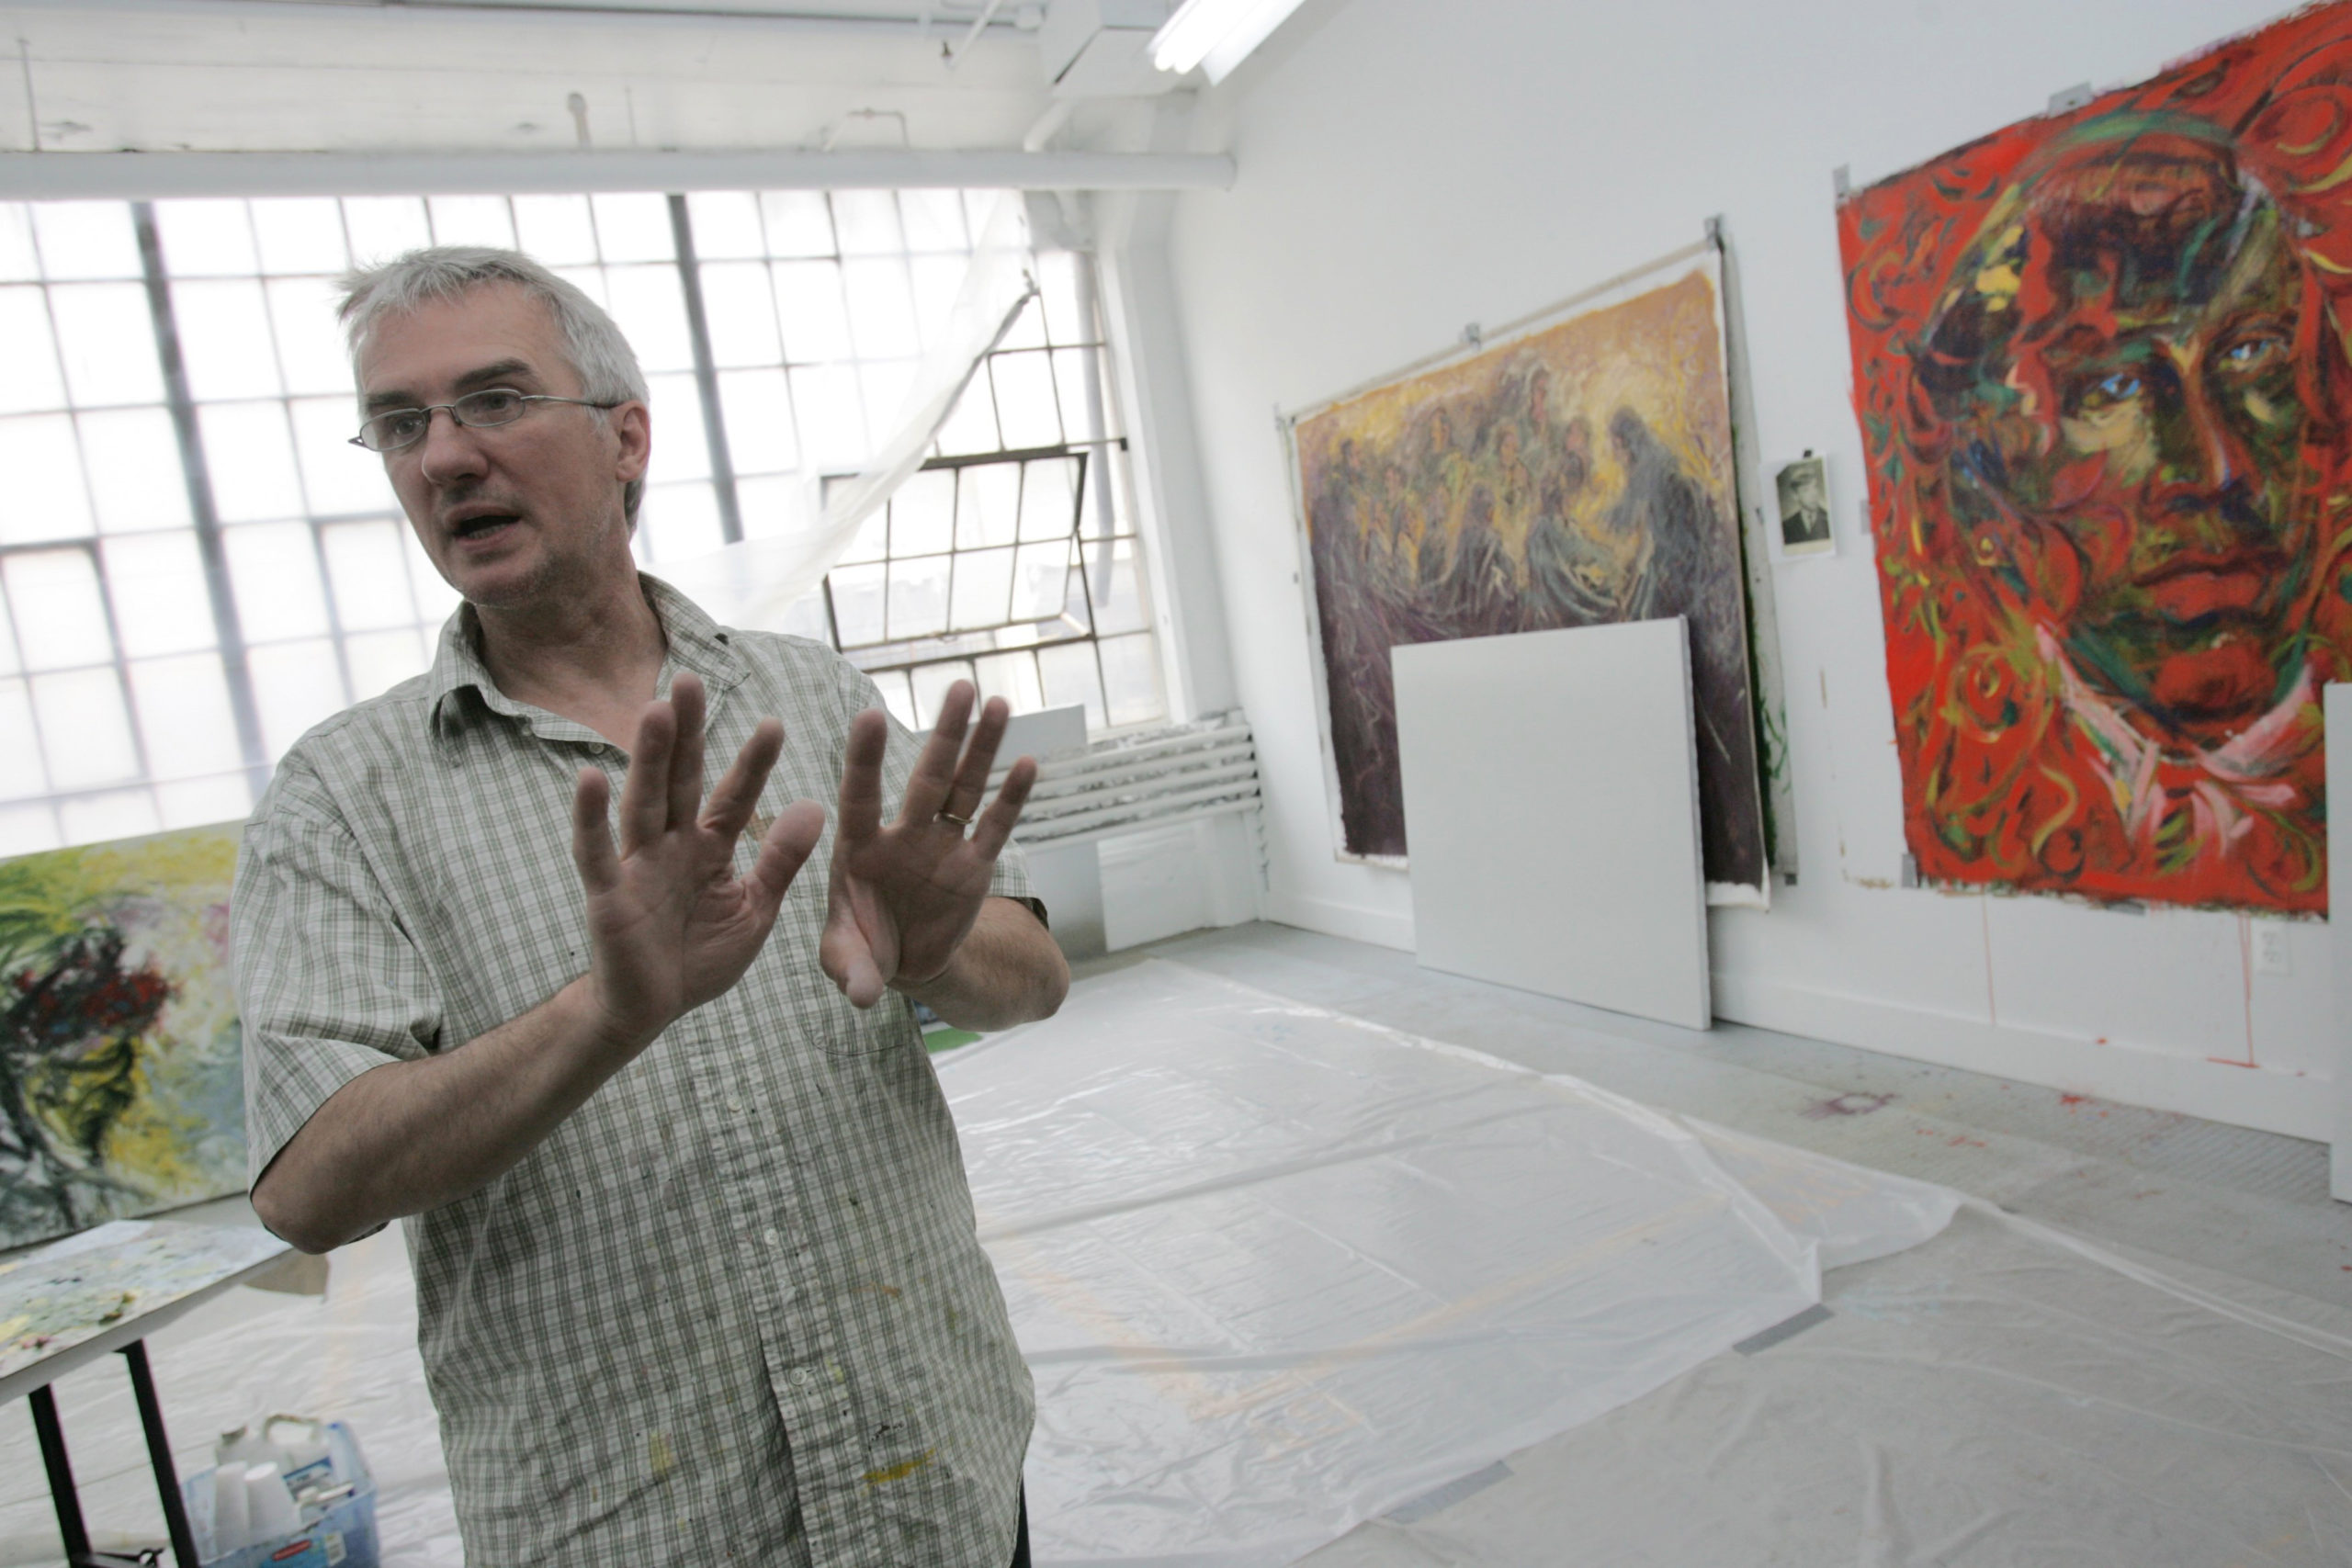 Artist Andrzej Sikora speaks of his art work in his studio at The Russell Industrial Center in Detr...